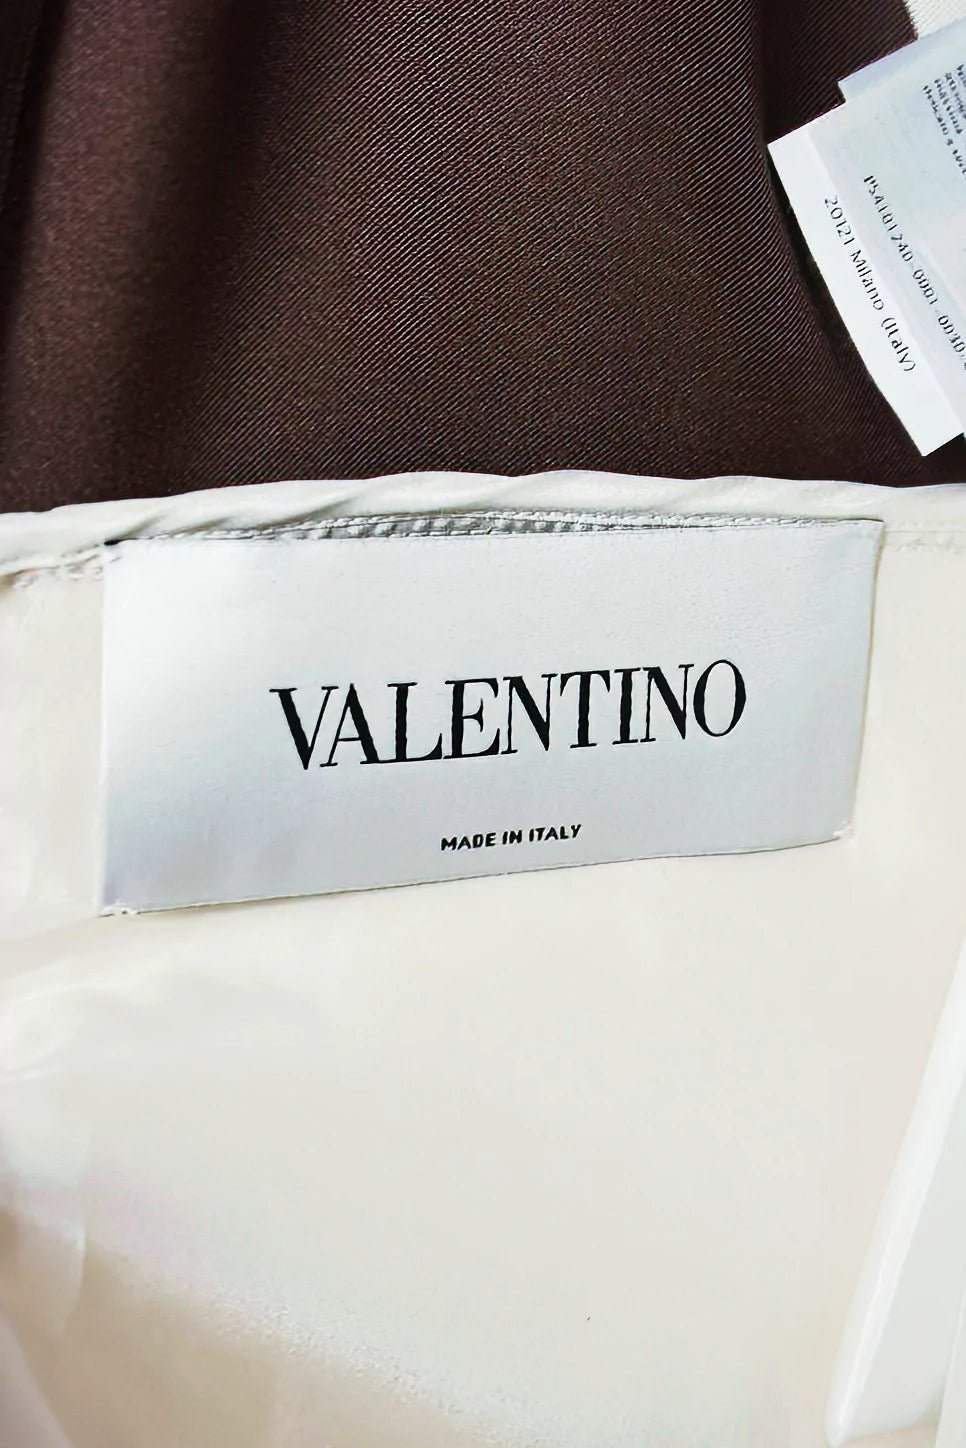 Valentino Typography Print Shirt Dress Brown and Cream